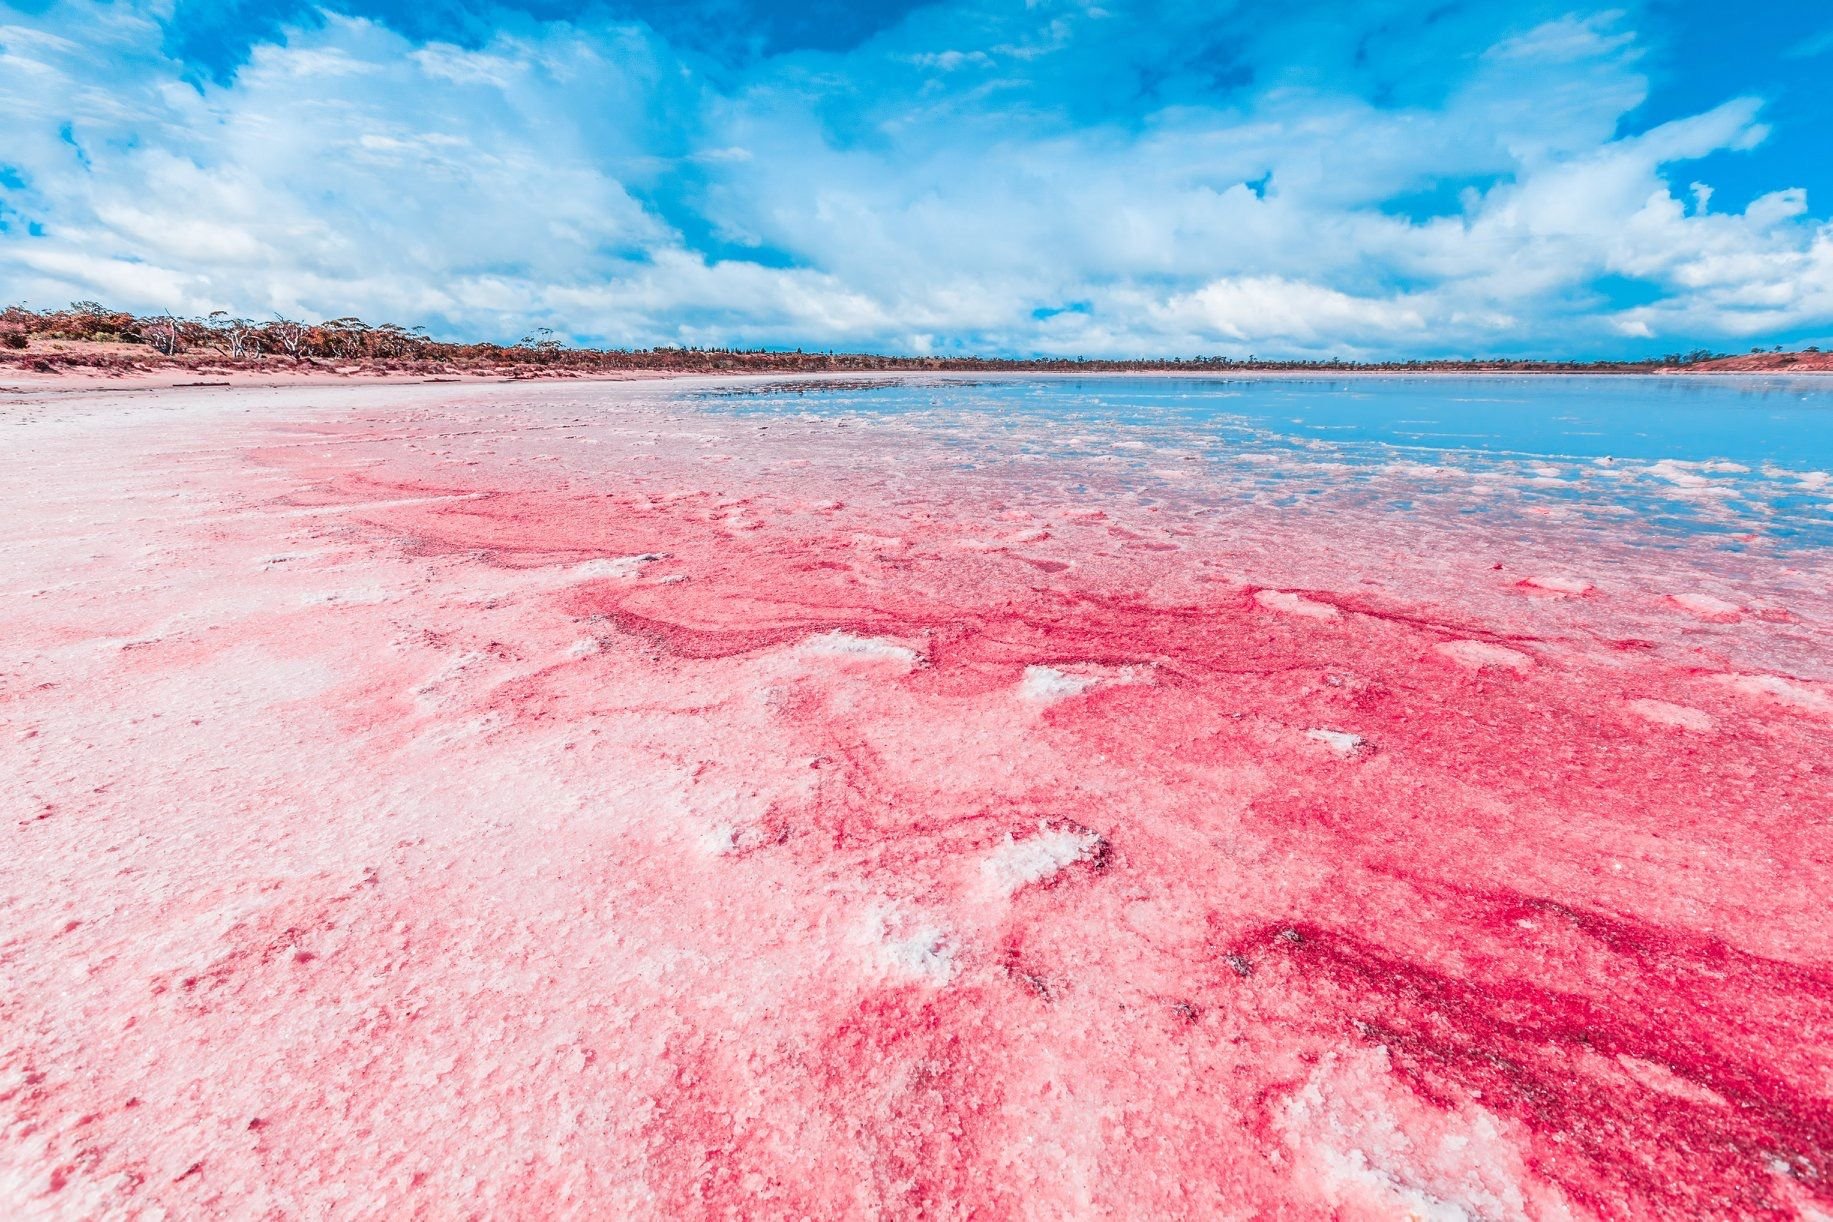 Есть розовое озеро. Озеро Хиллиер. Озеро Ретба Сенегал. Озеро Хиллер (hillier), Австралия. Розовое озеро Хиллер Австралия.